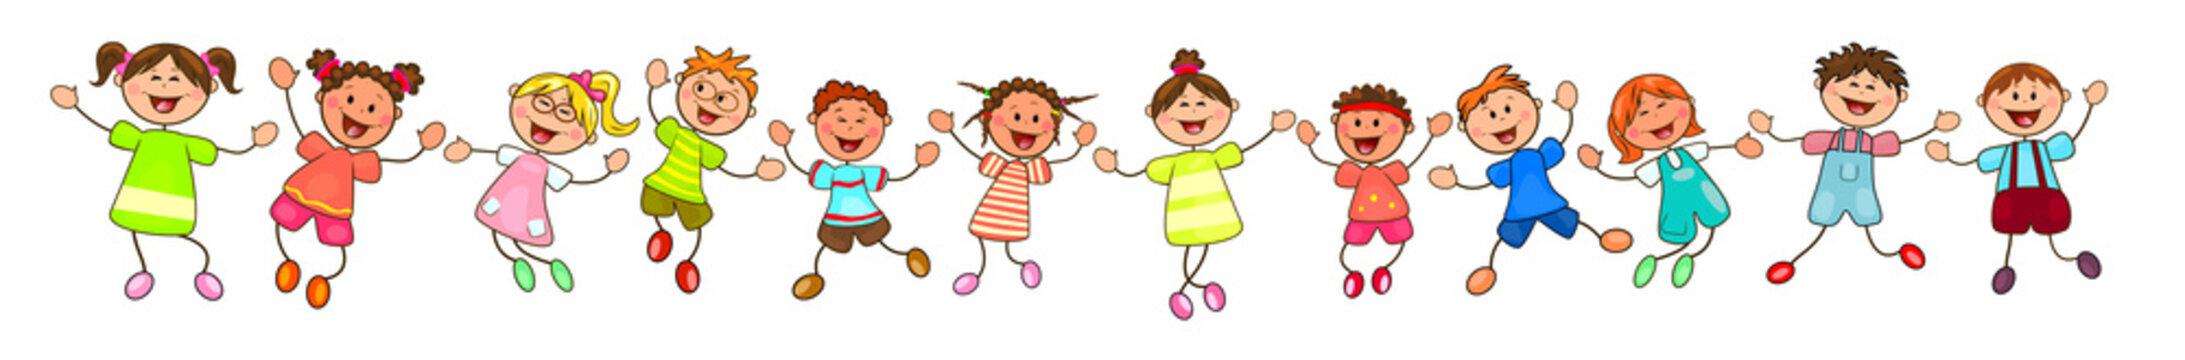 Group of happy, smiling children. Group of cheerful, smiling children on a white background. Cartoon joyful children